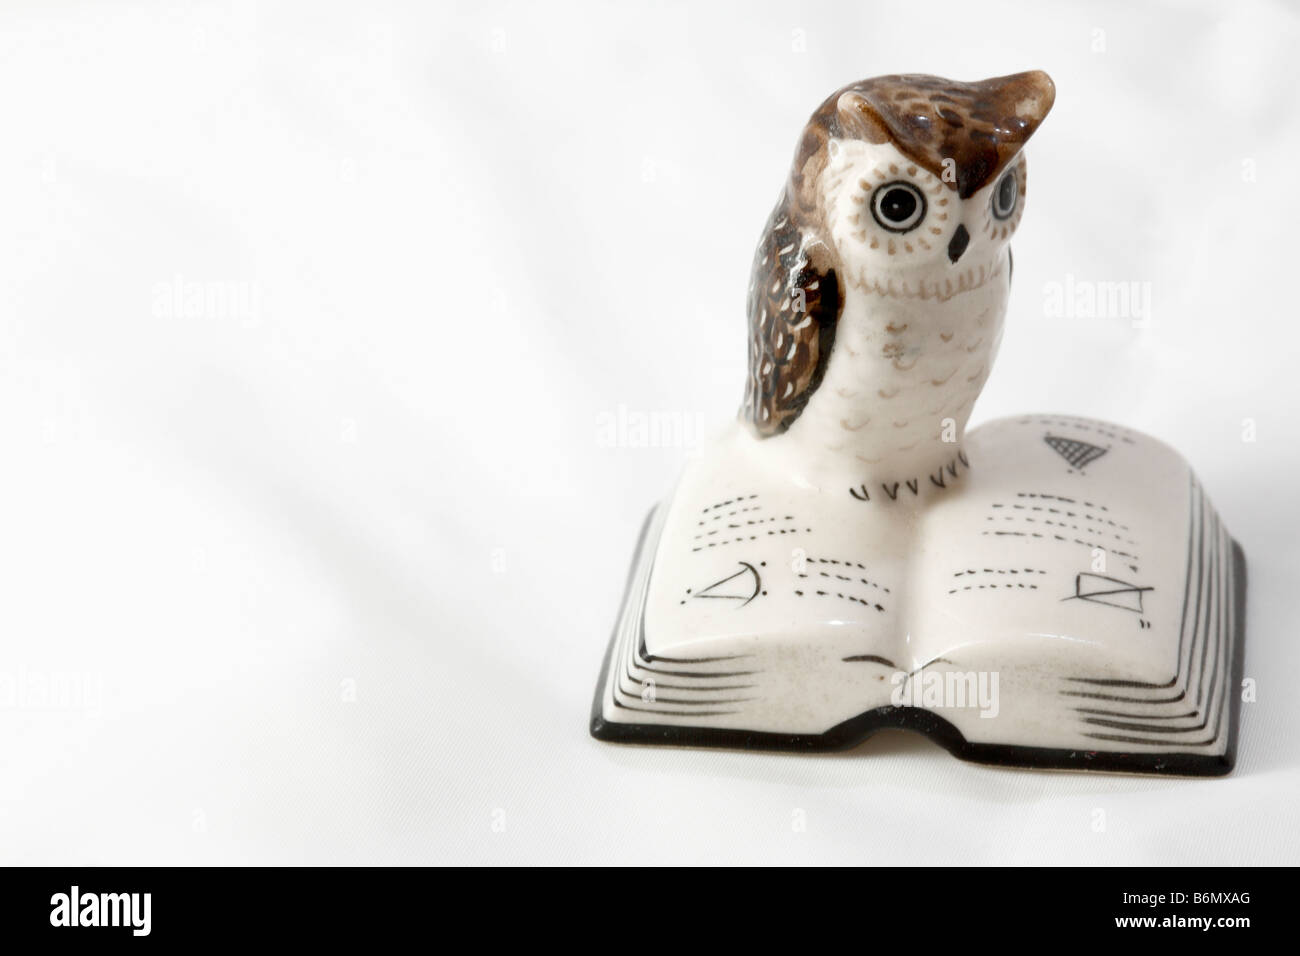 Ceramic figure of owl Stock Photo